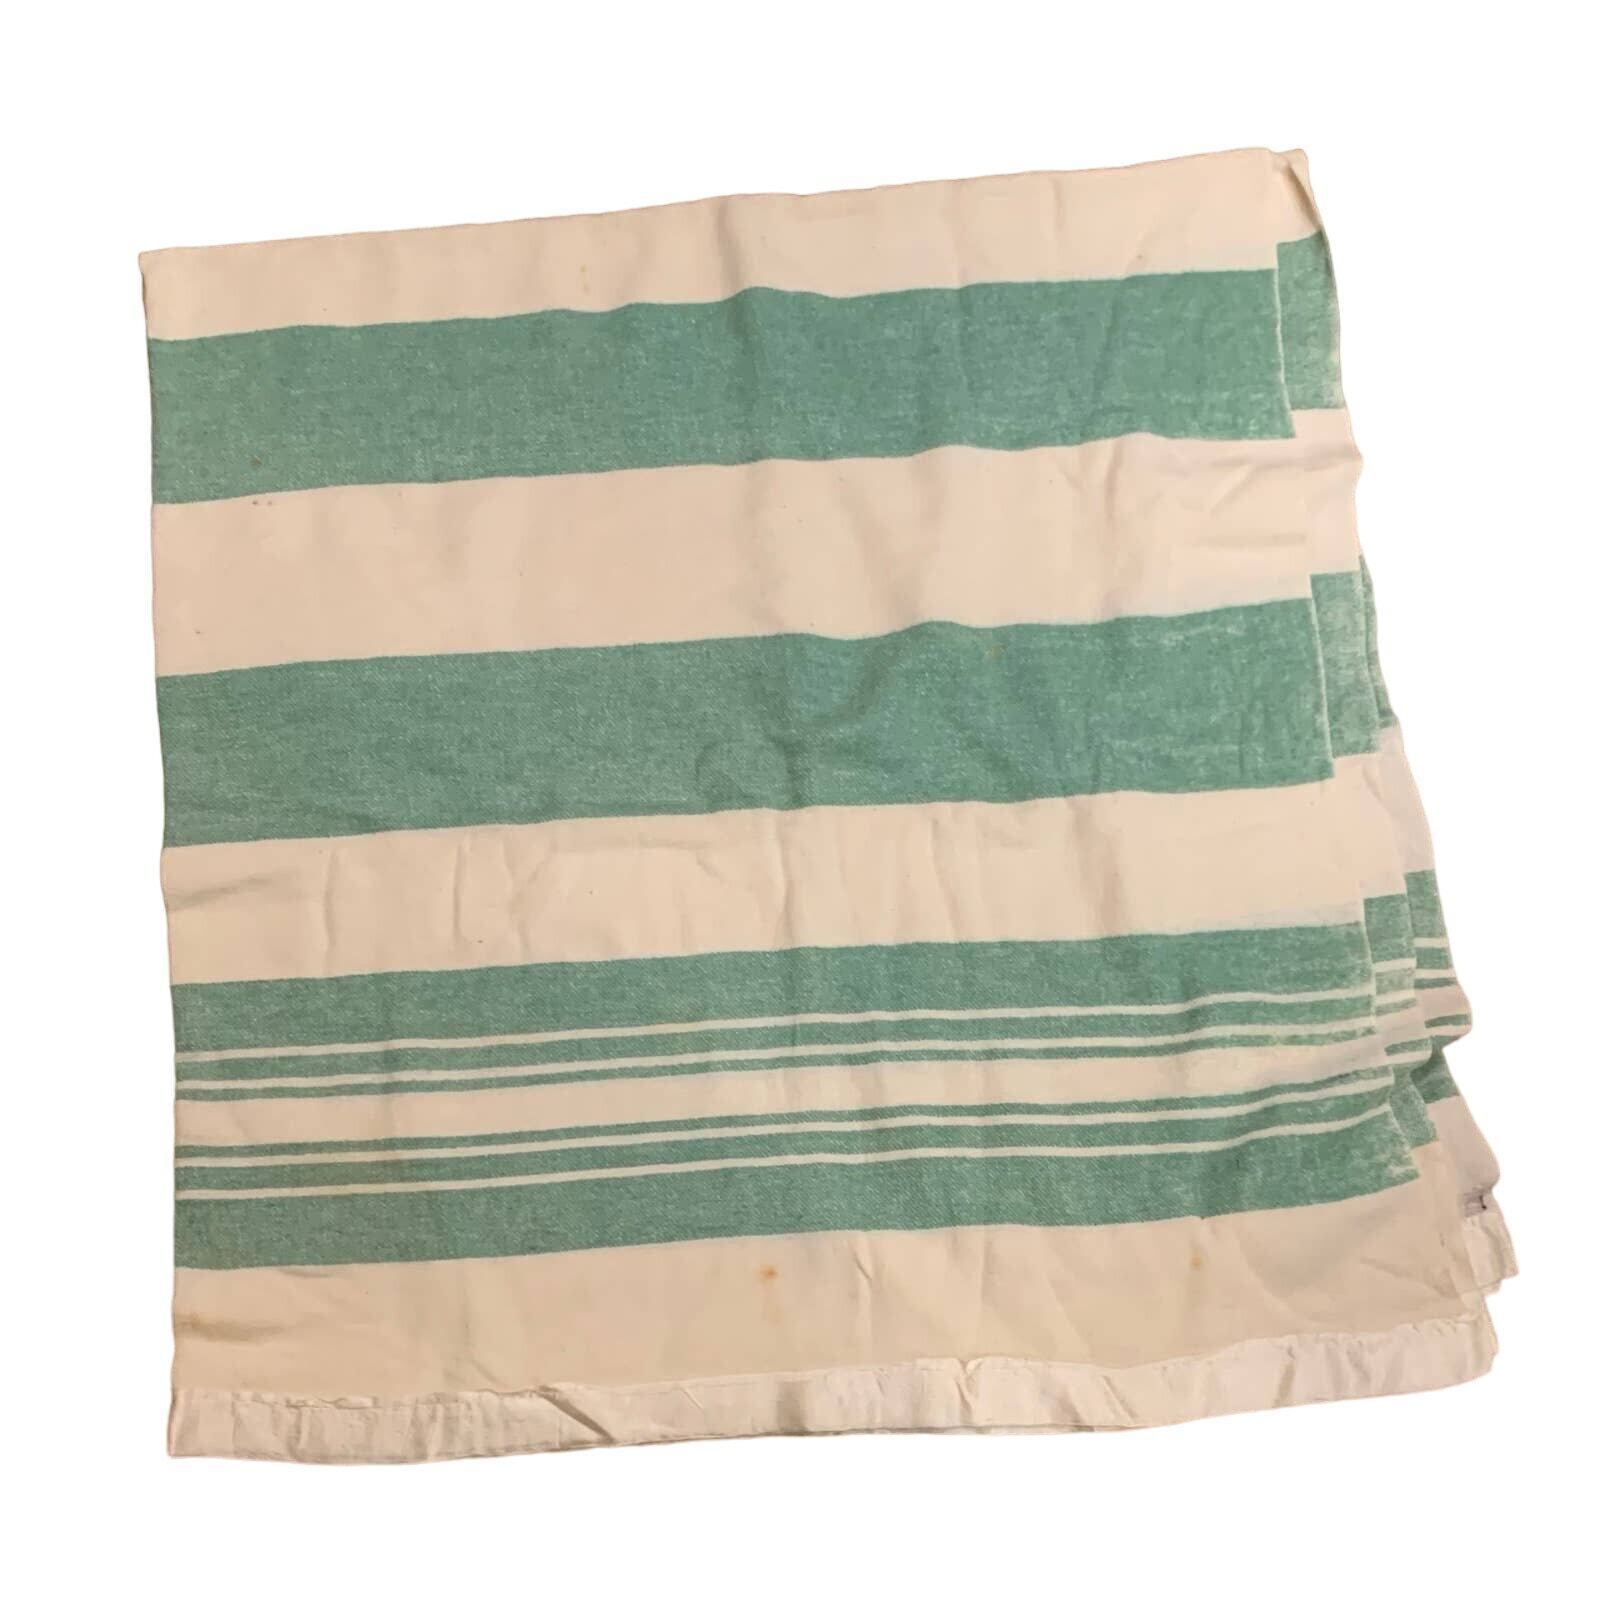 Vintage Woven Cotton Blanket 76 x 71